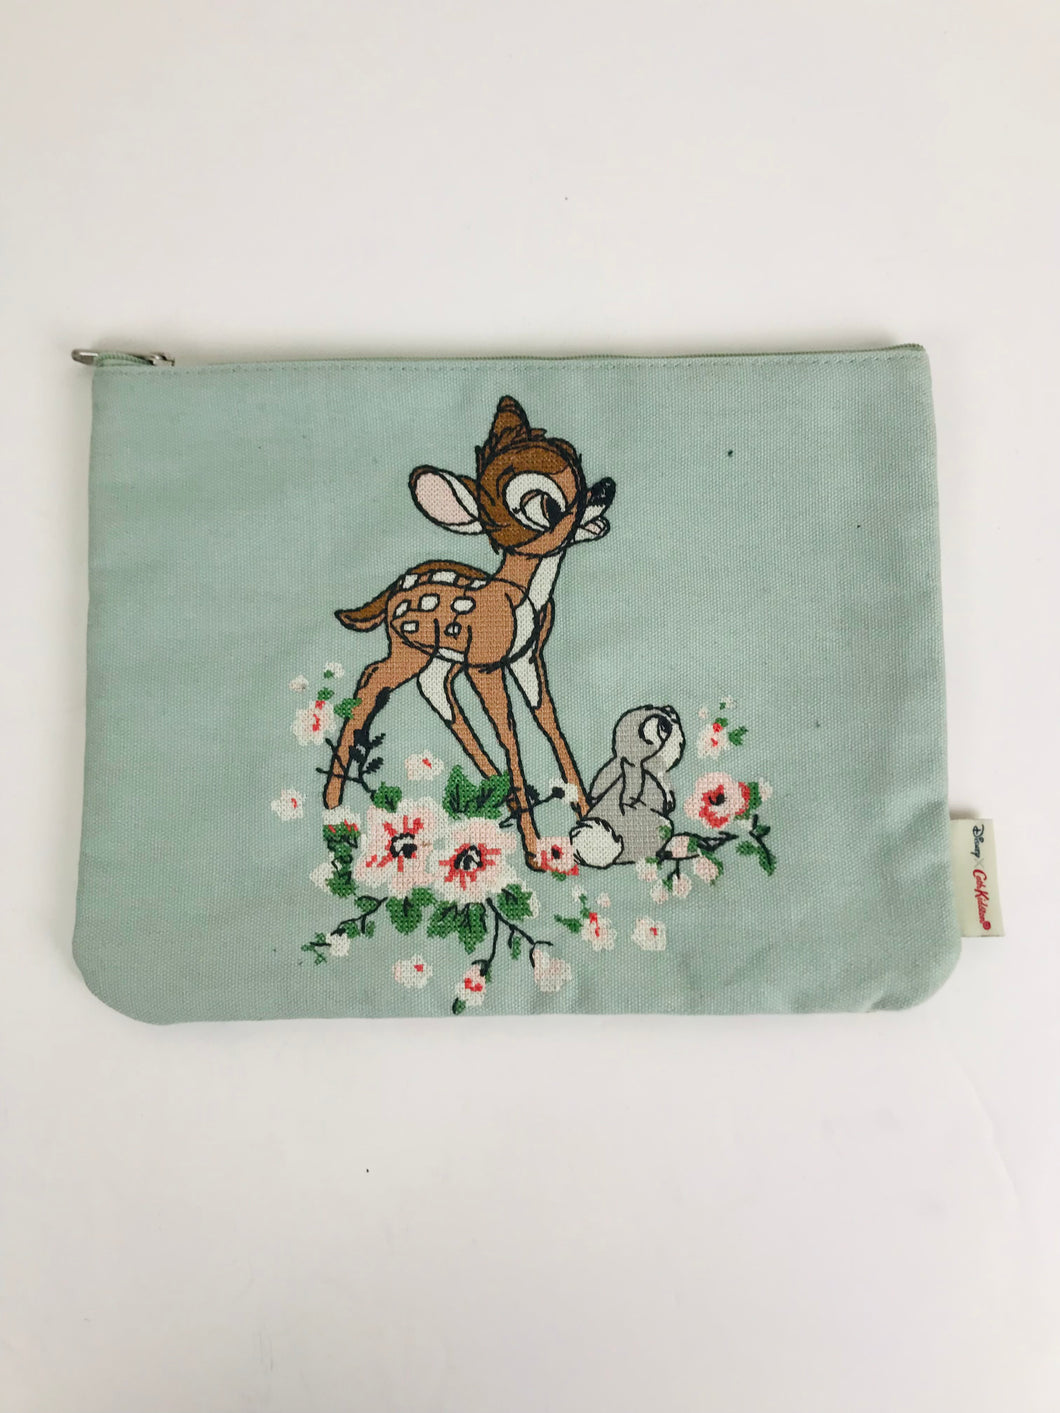 Cath Kidston x Disney Women's Cotton Embroidered Clutch Bag | OS | Multicoloured